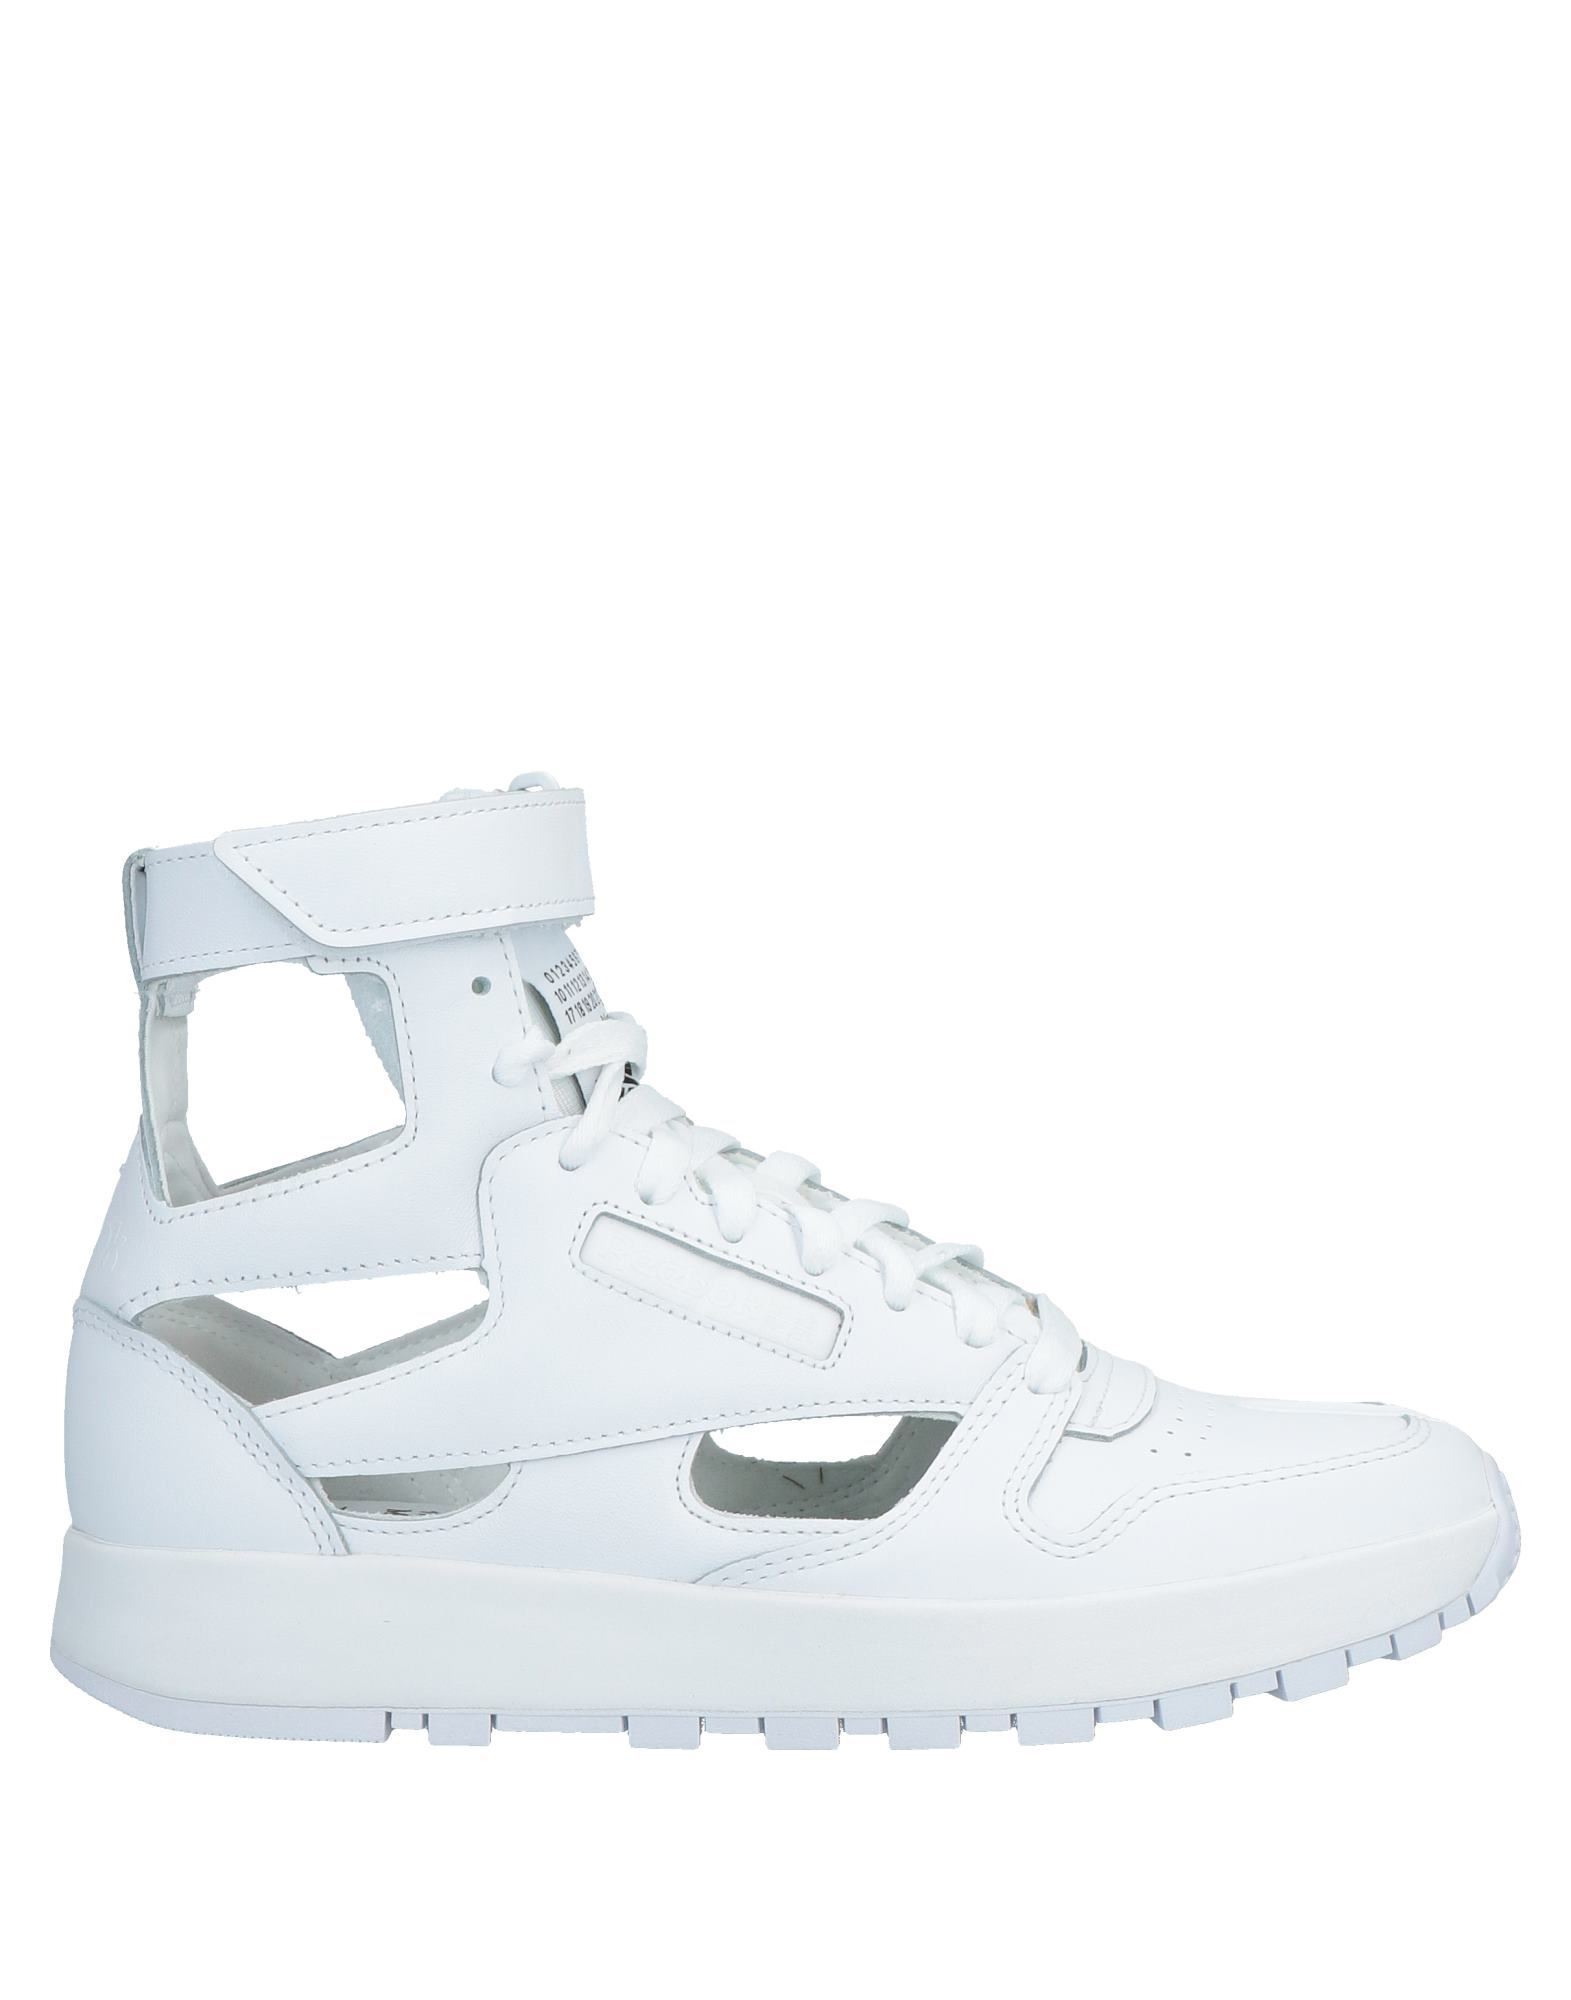 Shop Maison Margiela X Reebok Woman Sneakers White Size 8 Soft Leather, Textile Fibers